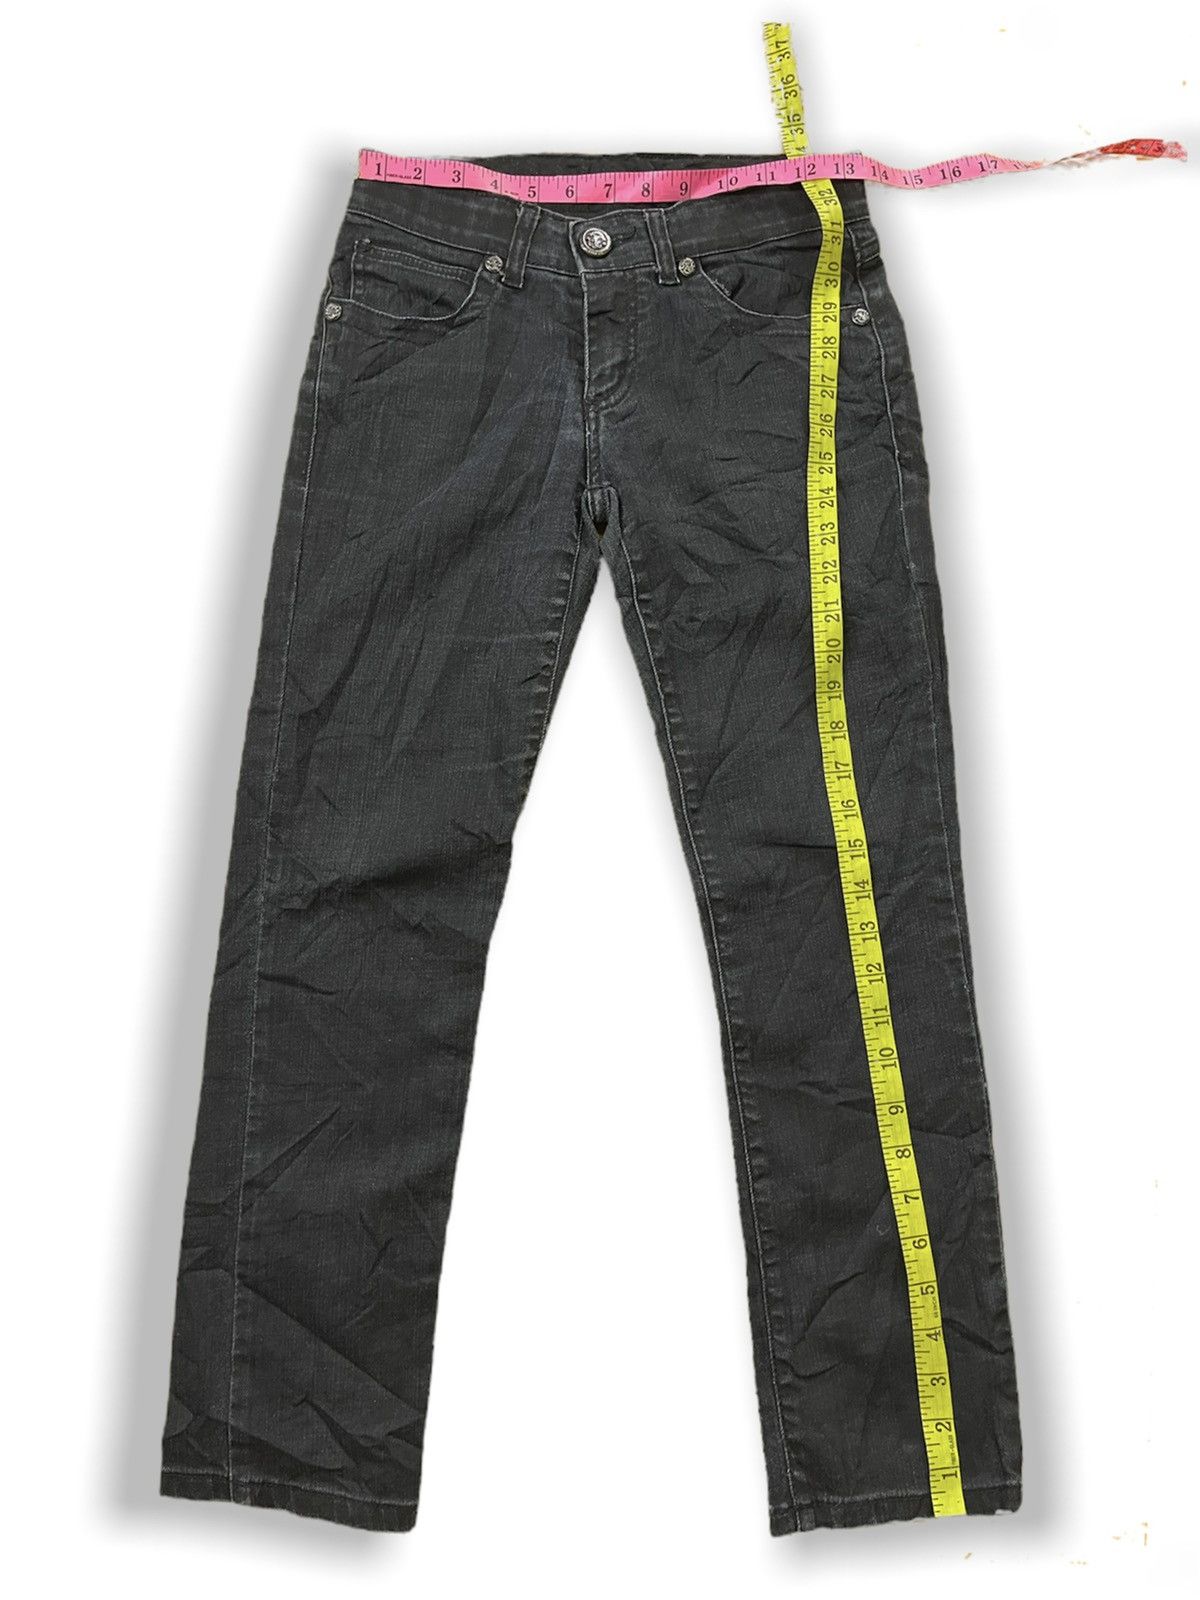 Archival Clothing - Faith Connexion Black Denim Jeans Made In Japan - 4